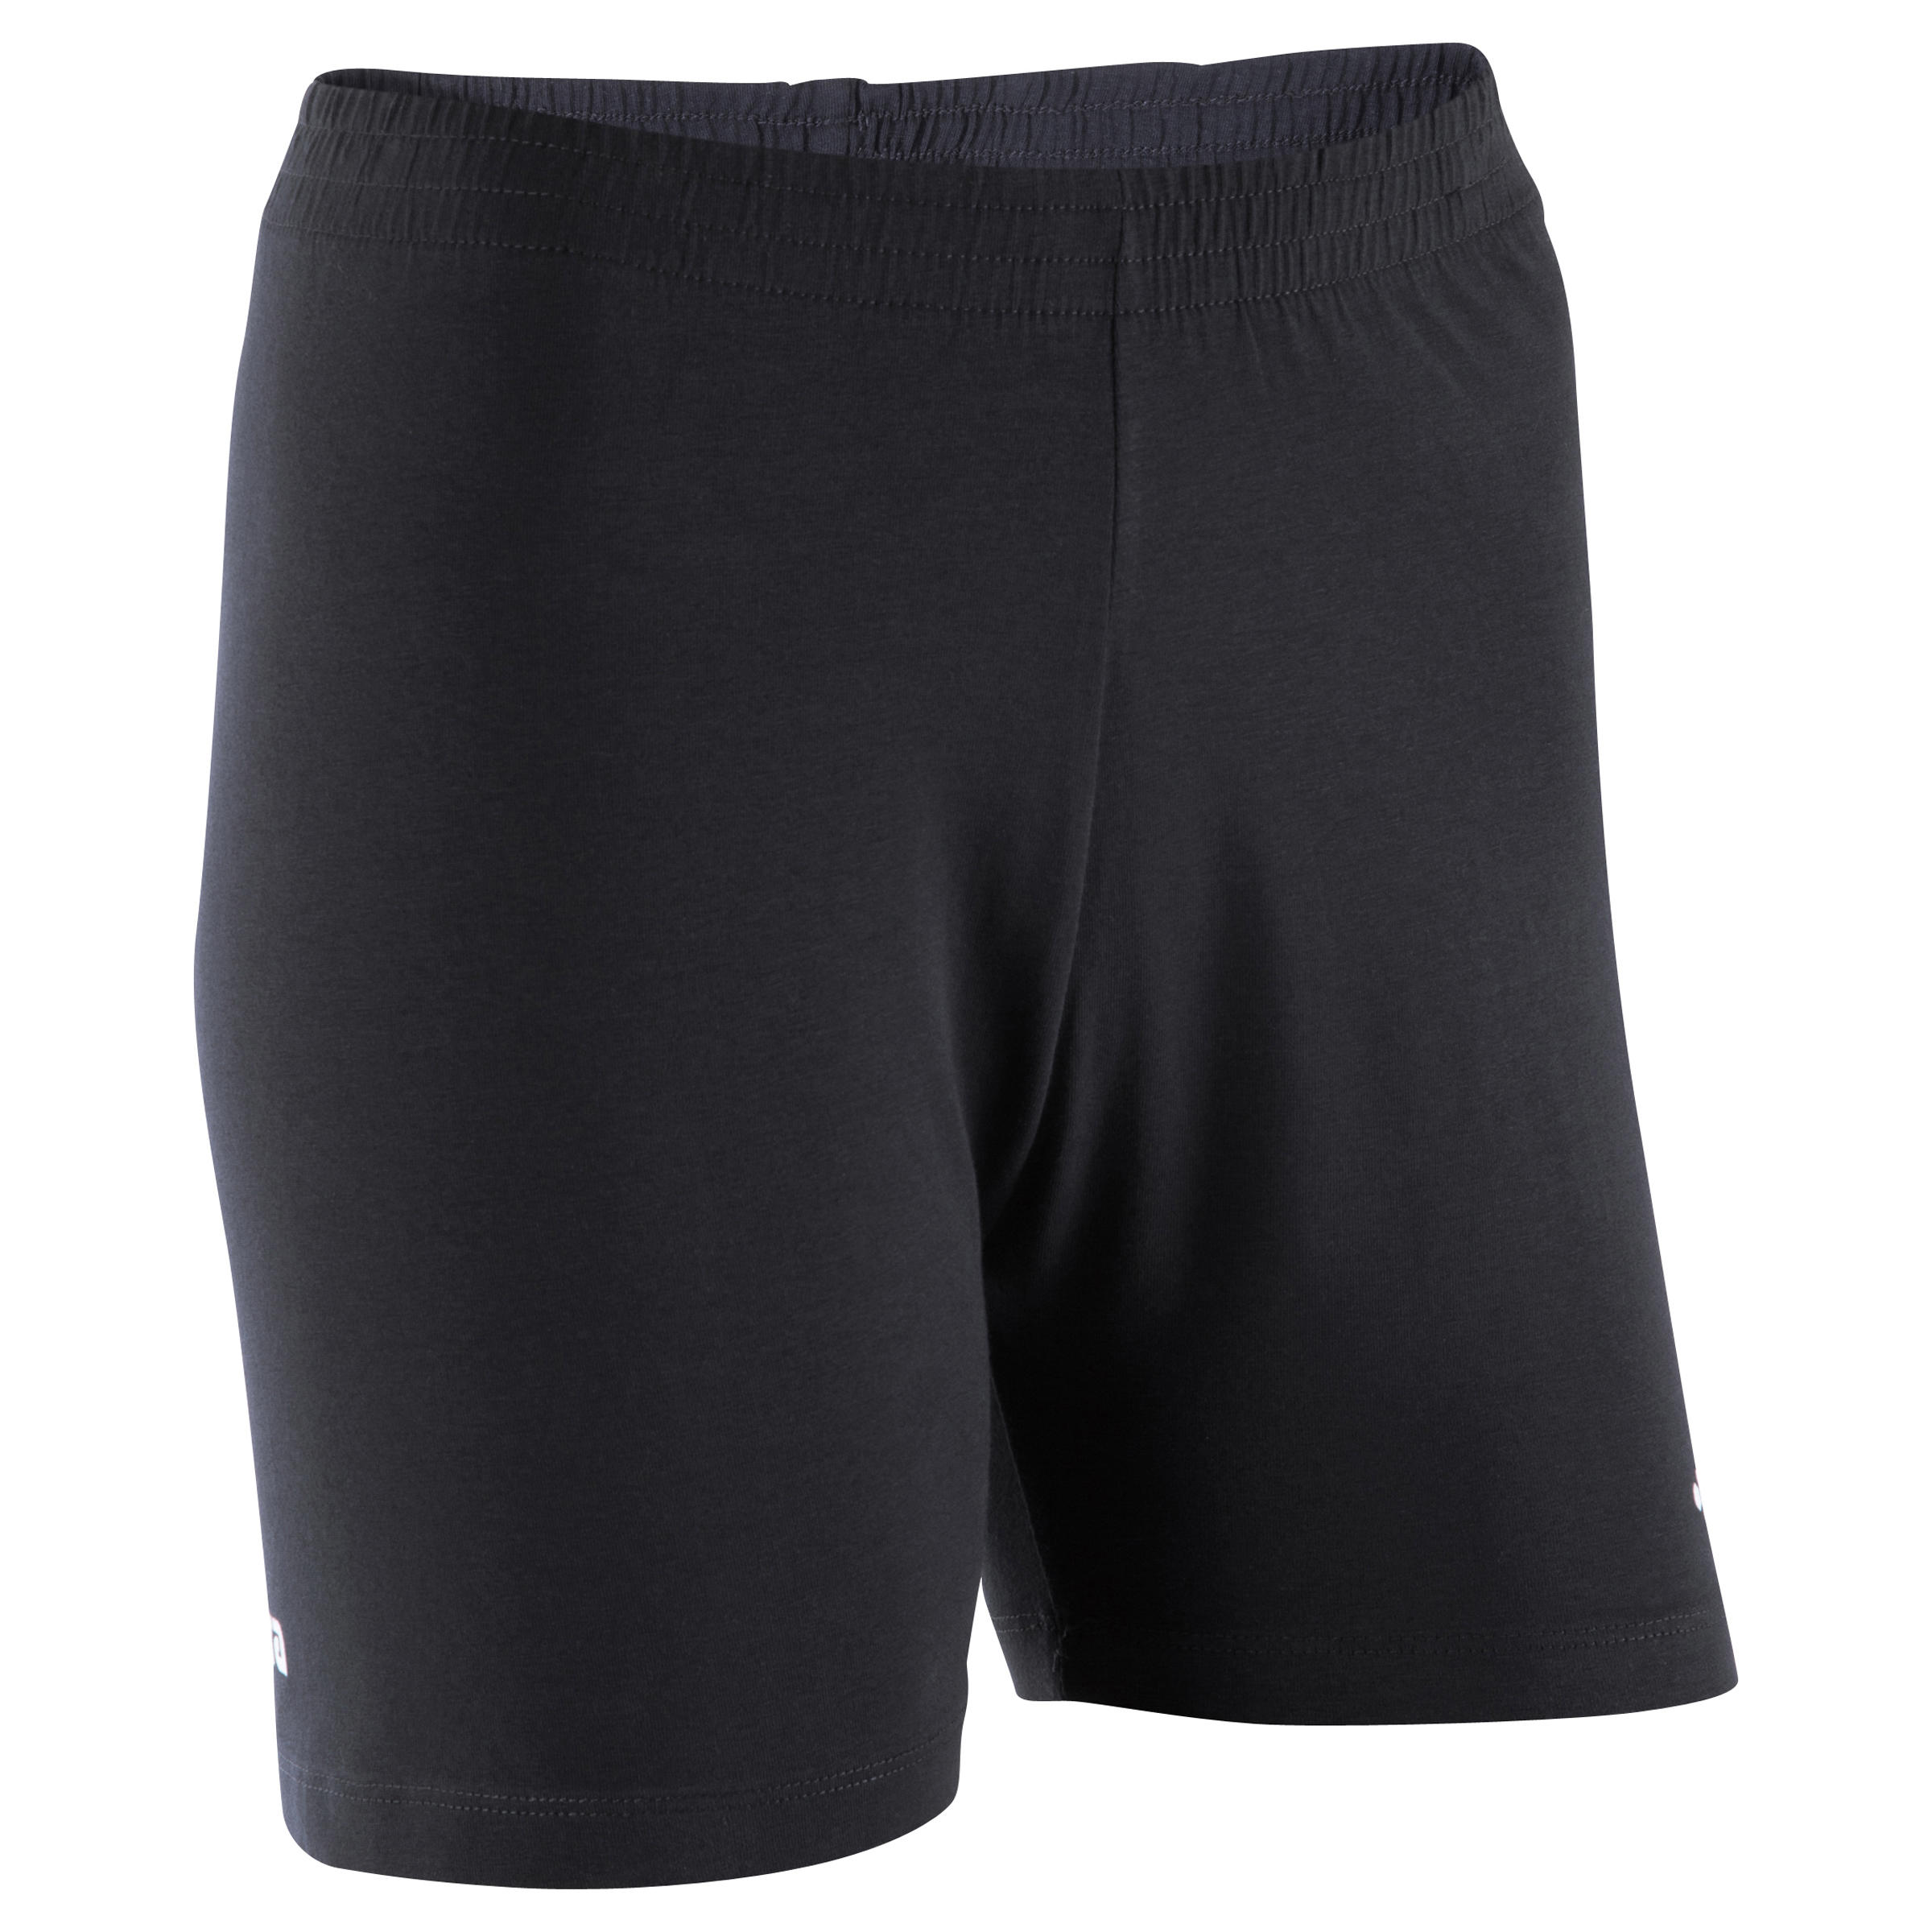 Lady Women's Volleyball Shorts - Black 2/4